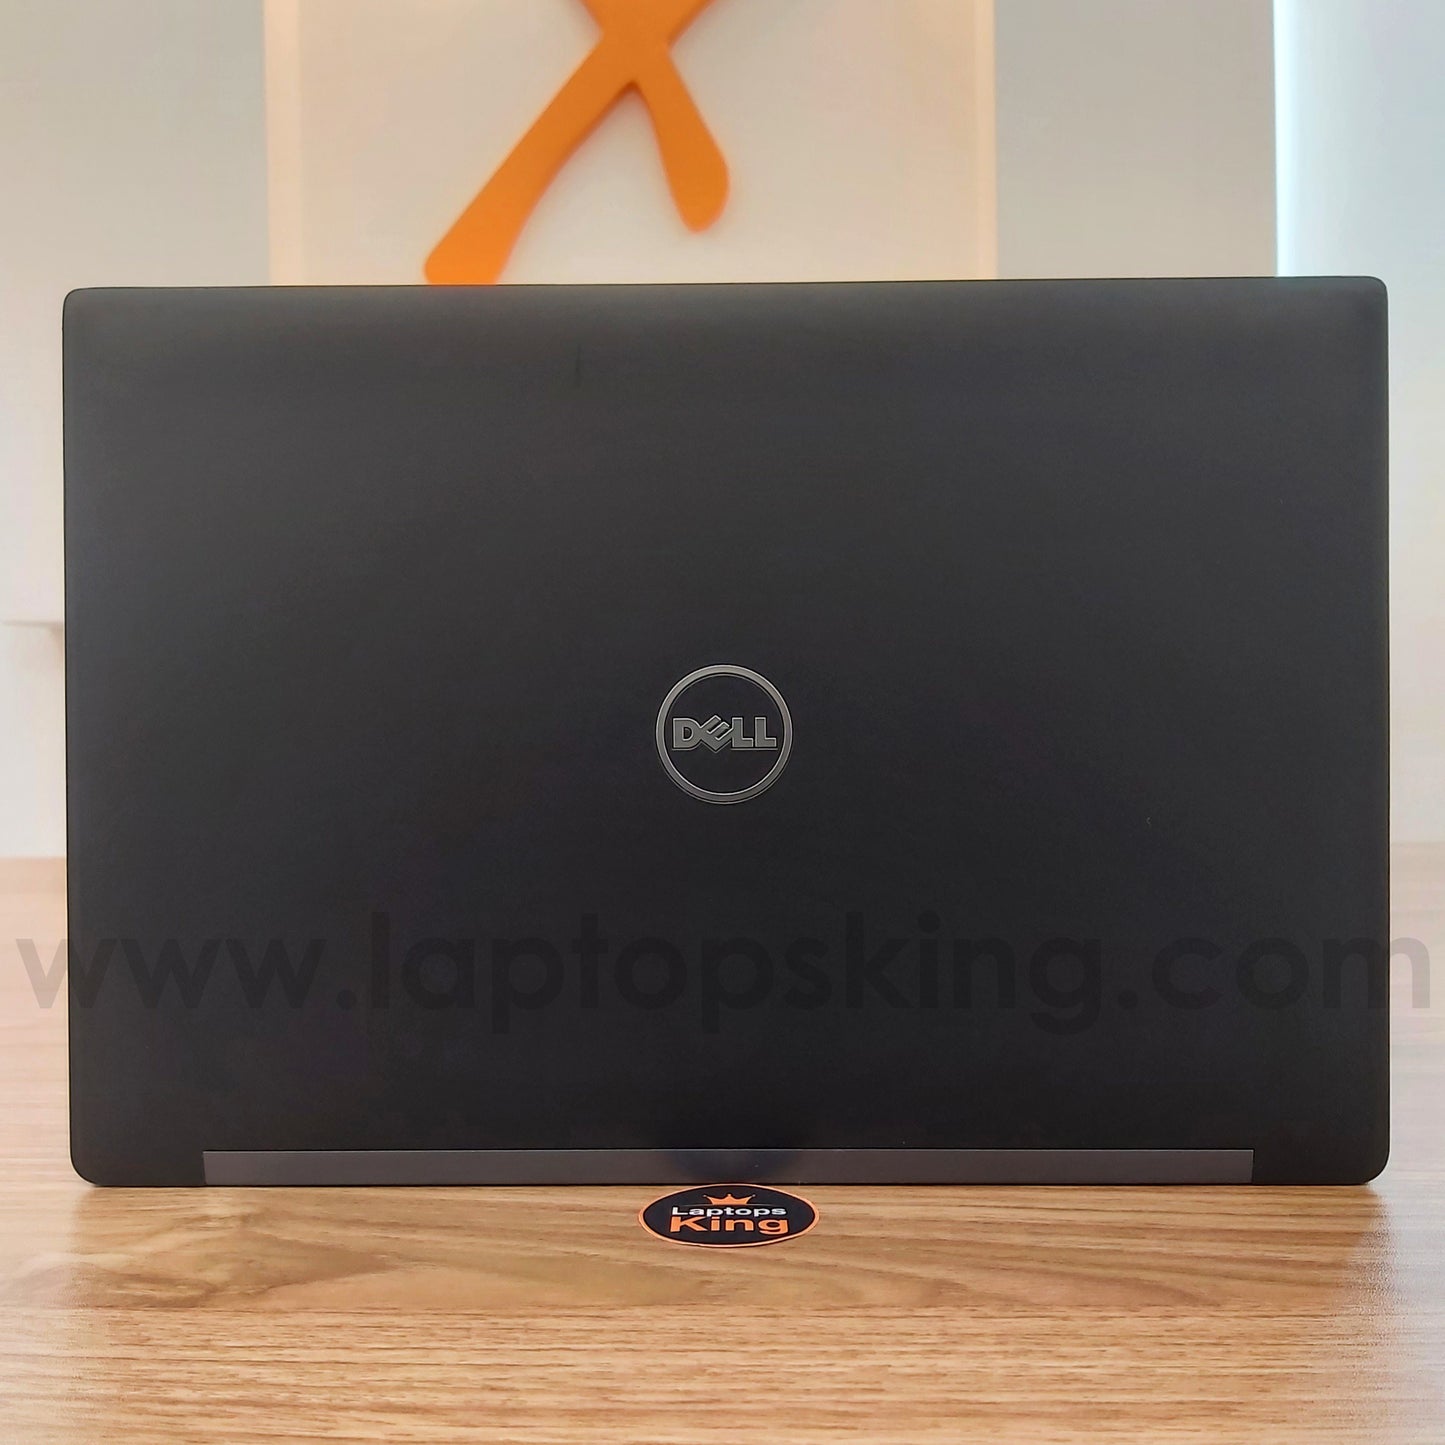 Dell Latitude 7280 i7-7600u 13" Touchscreen Laptop (Open Box)